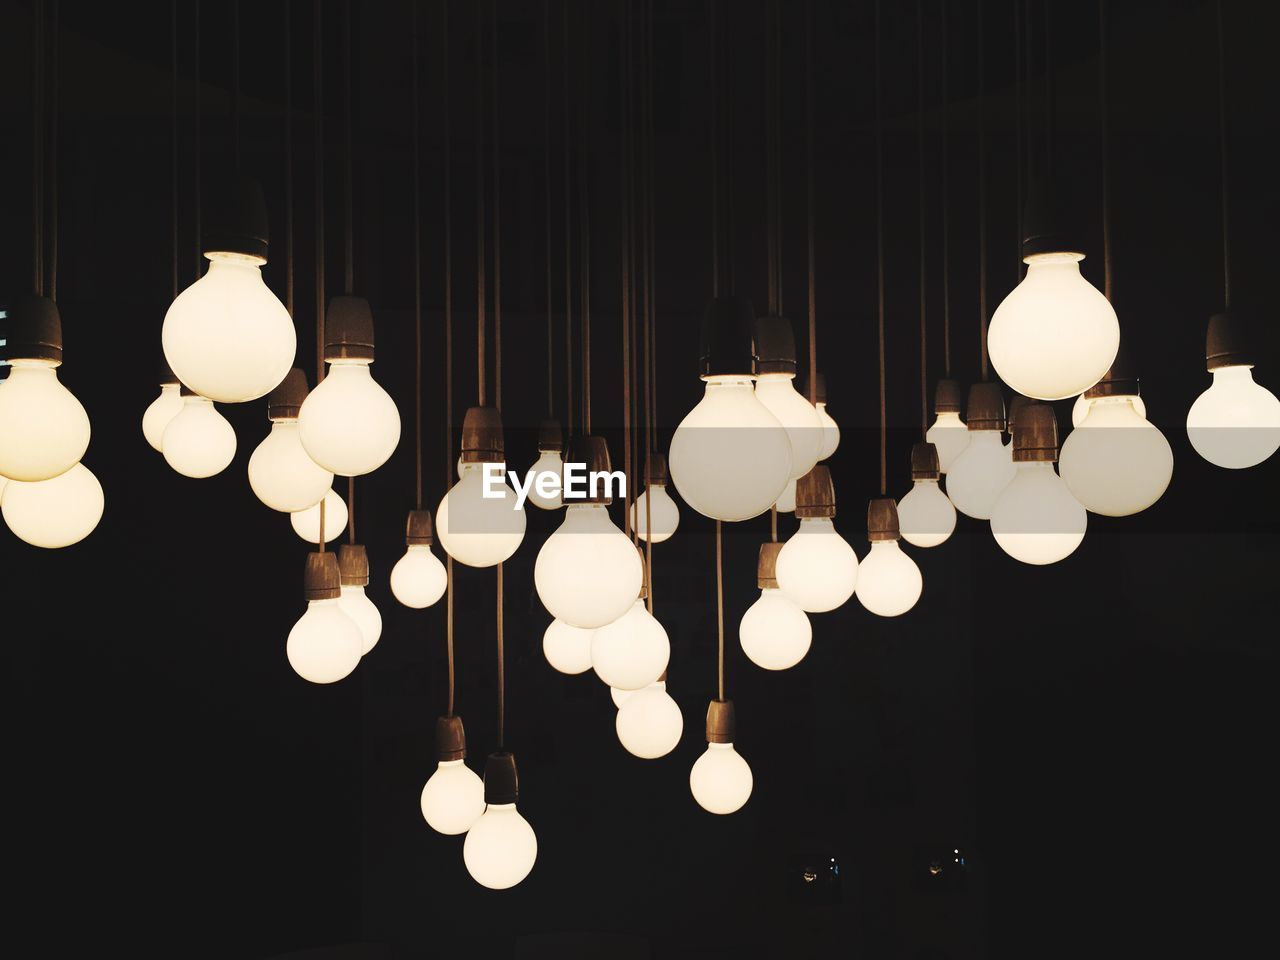 Illuminated light bulbs hanging against black background